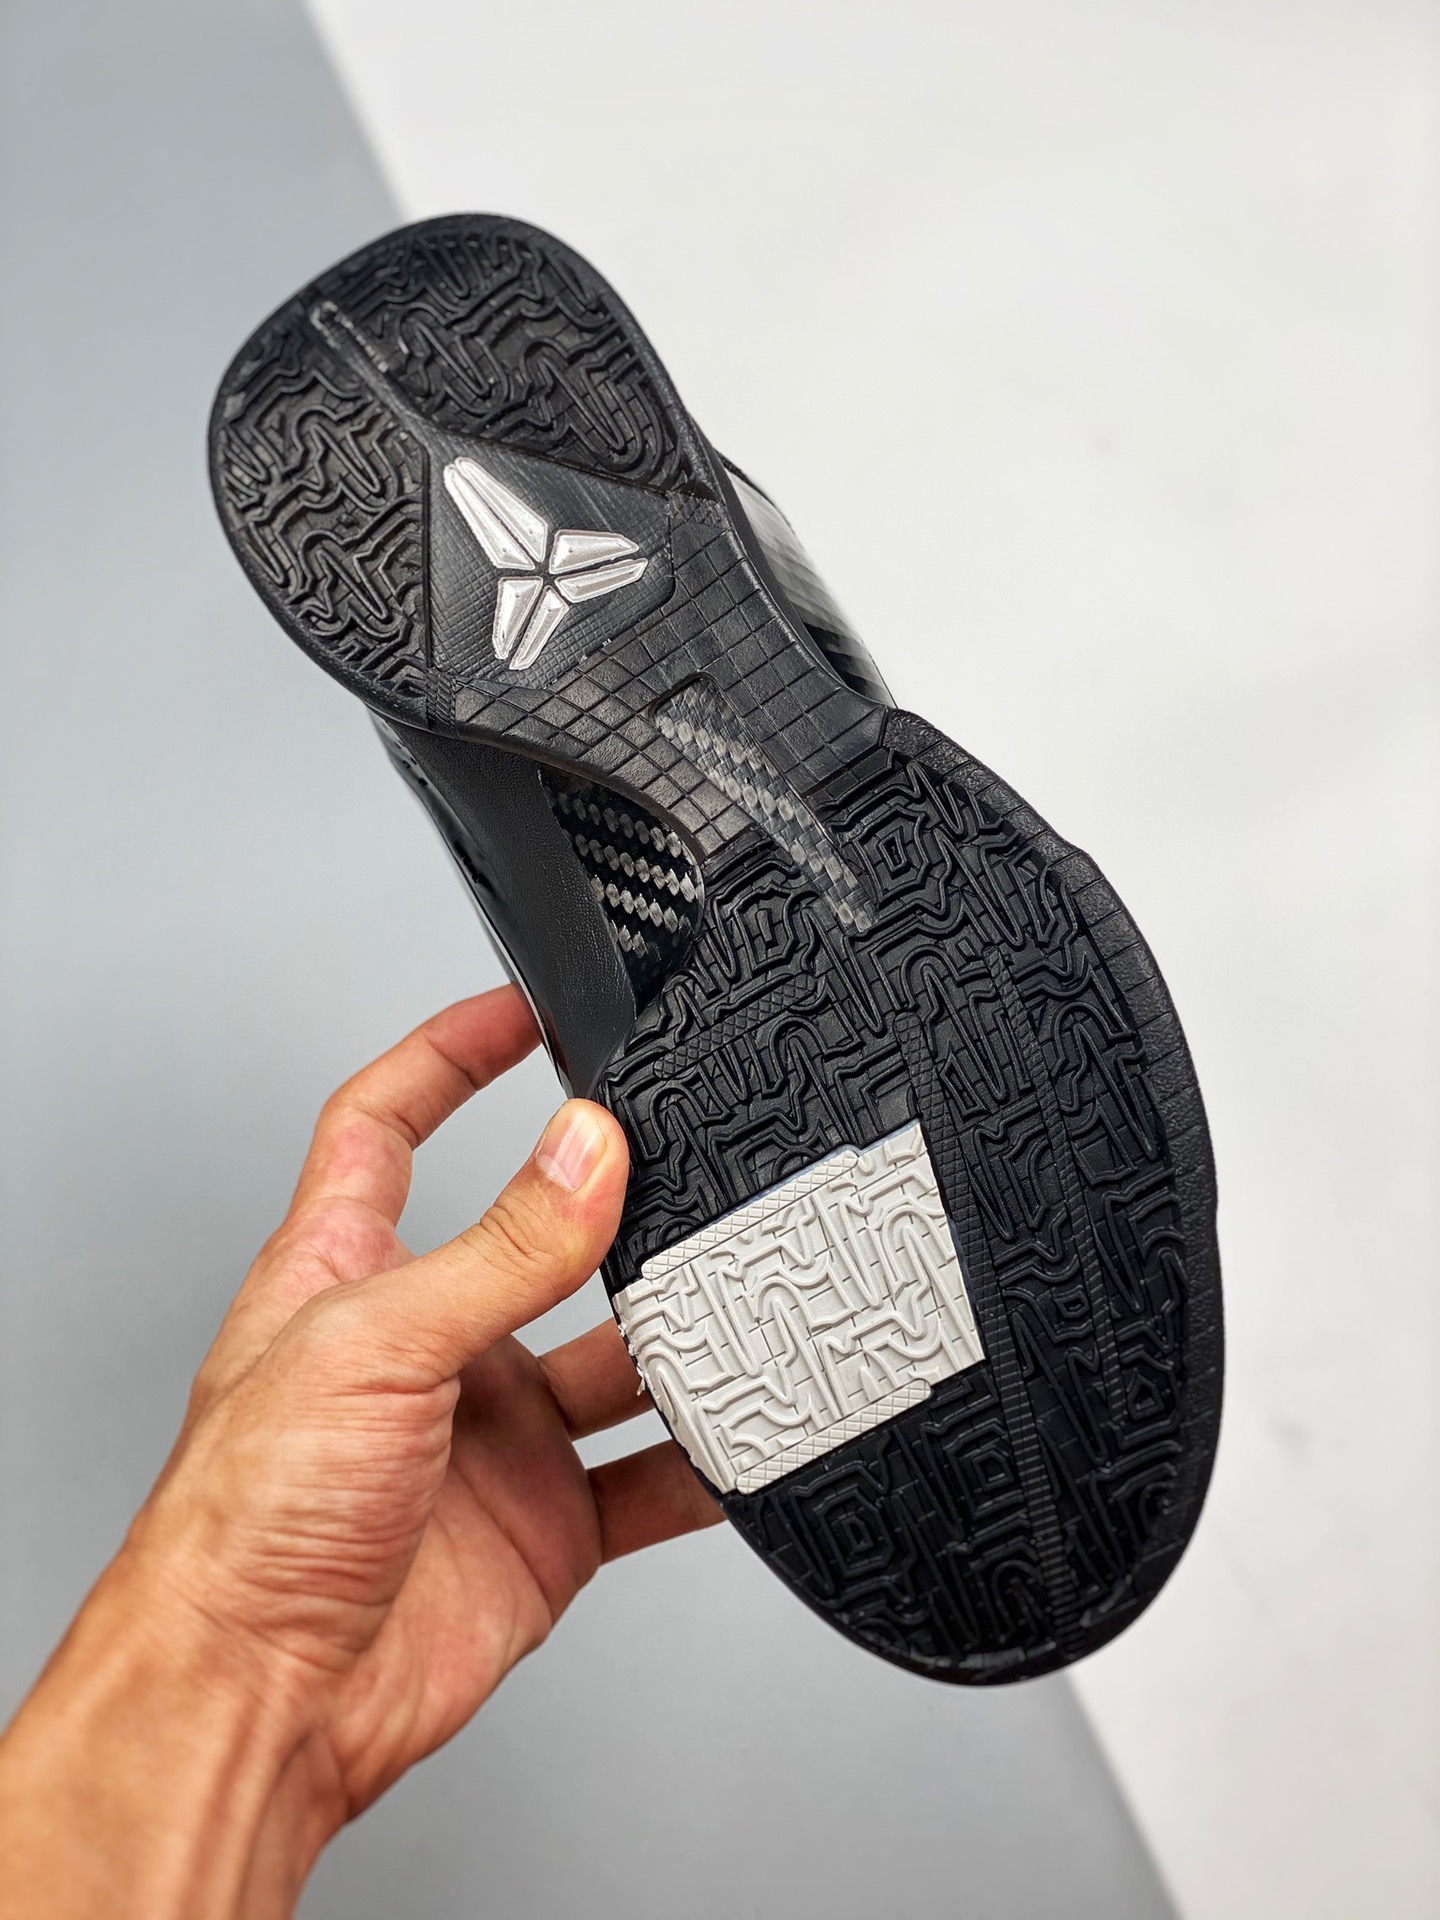 003 - GmarShops - Nike Air Zoom Kobe 5 Black Out Mtllc Slvr Drk Gry  Basketball Shoes 386429 - Women's Johnston and Murphy Marlena Cross-Band  Slide Sandals